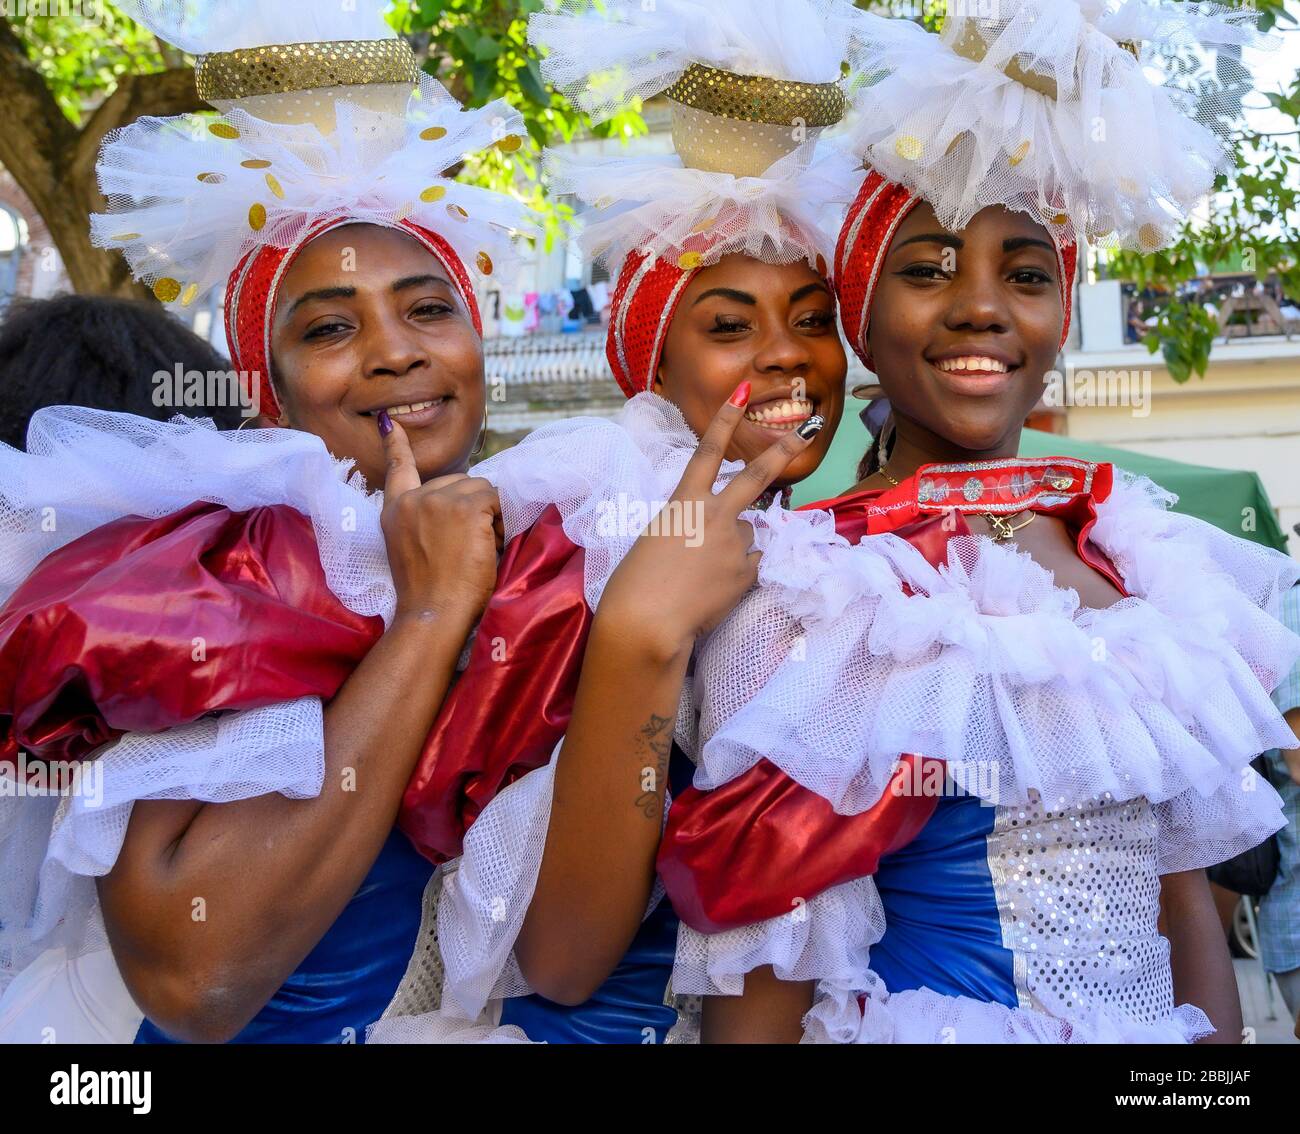 Women in decorative festival outfits, Havana, Cuba Stock Photo